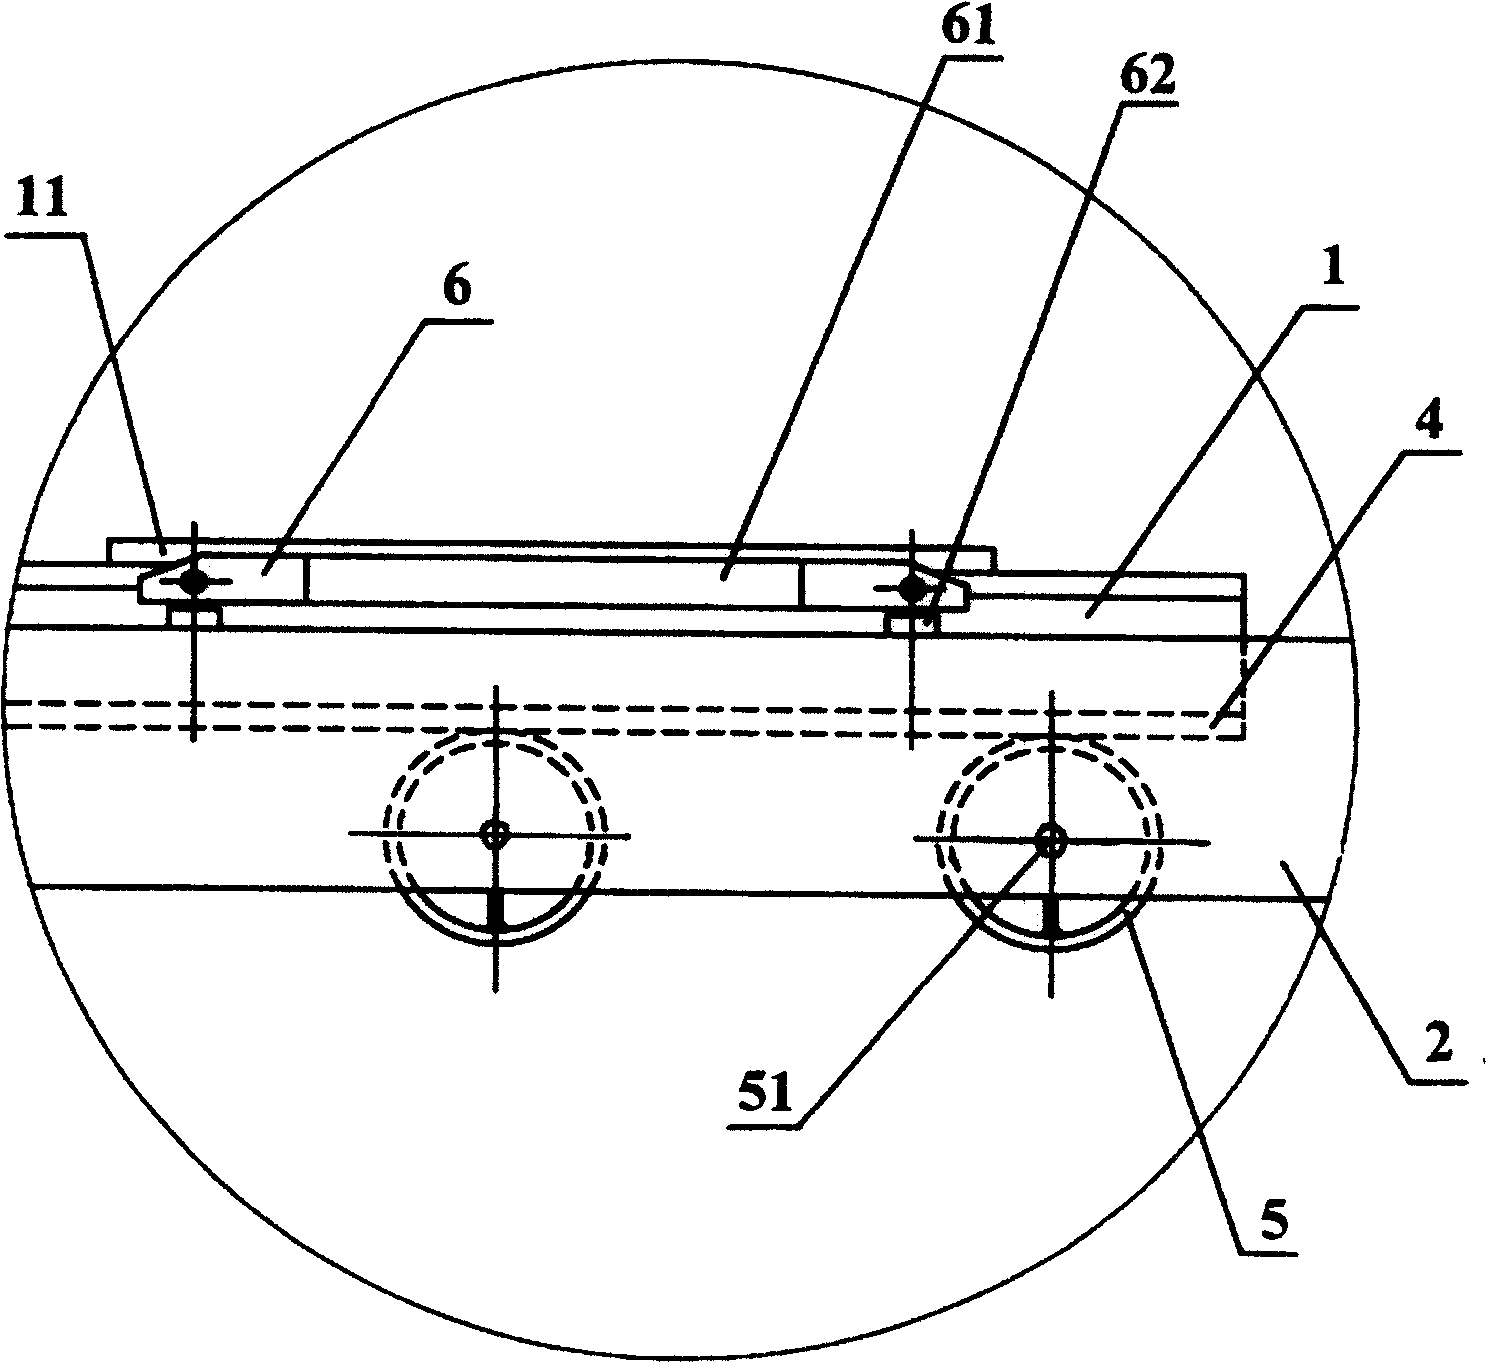 Accumulating conveyor for shield segment